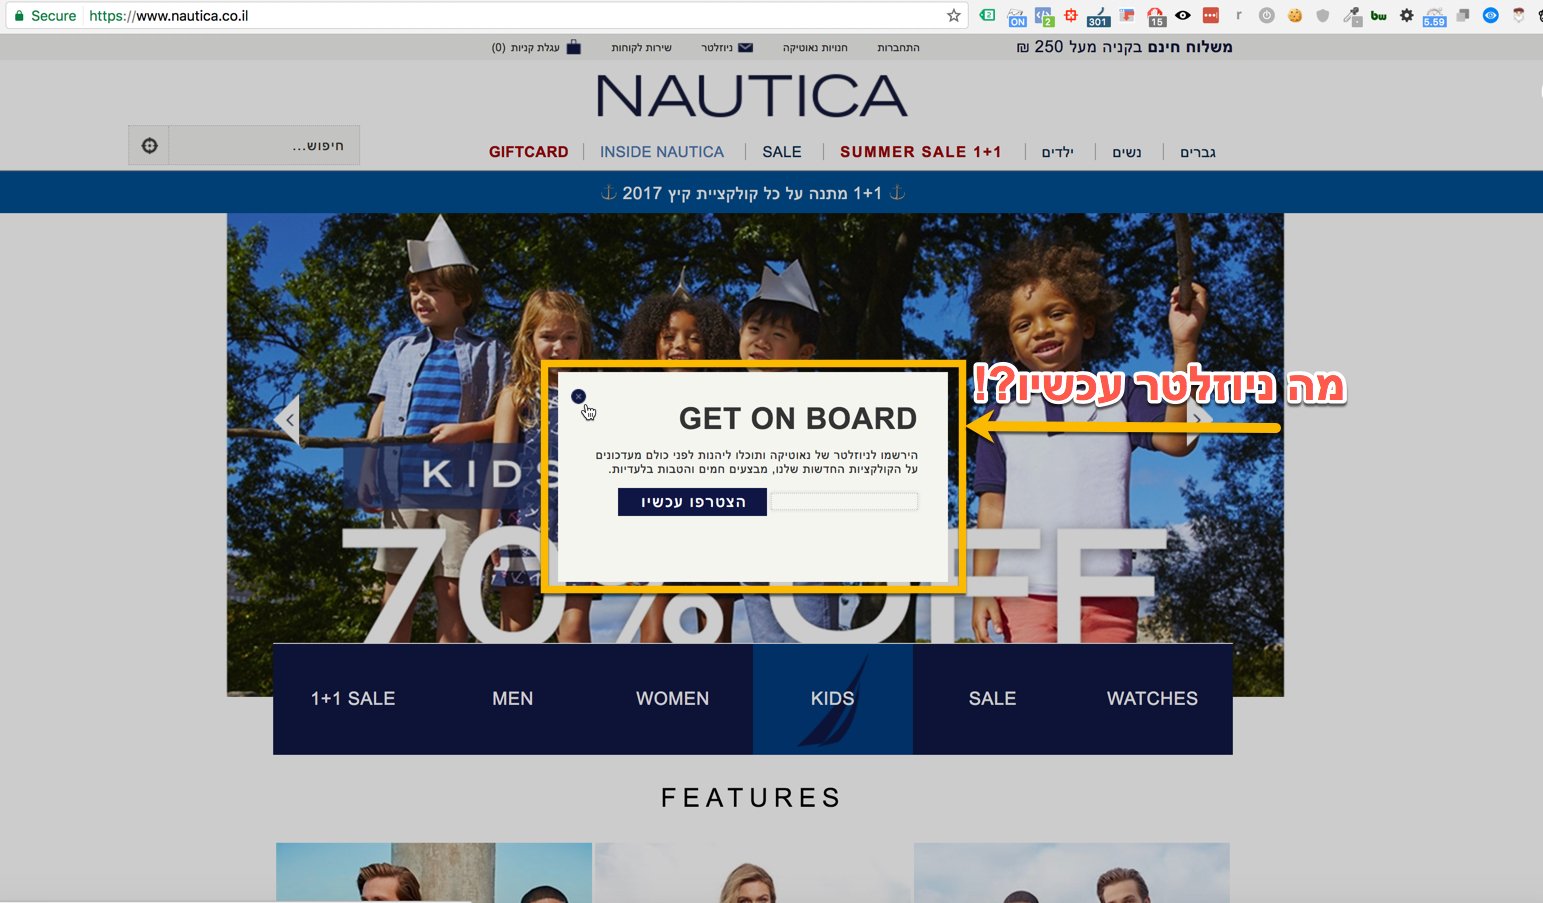 nautica homepage optimization